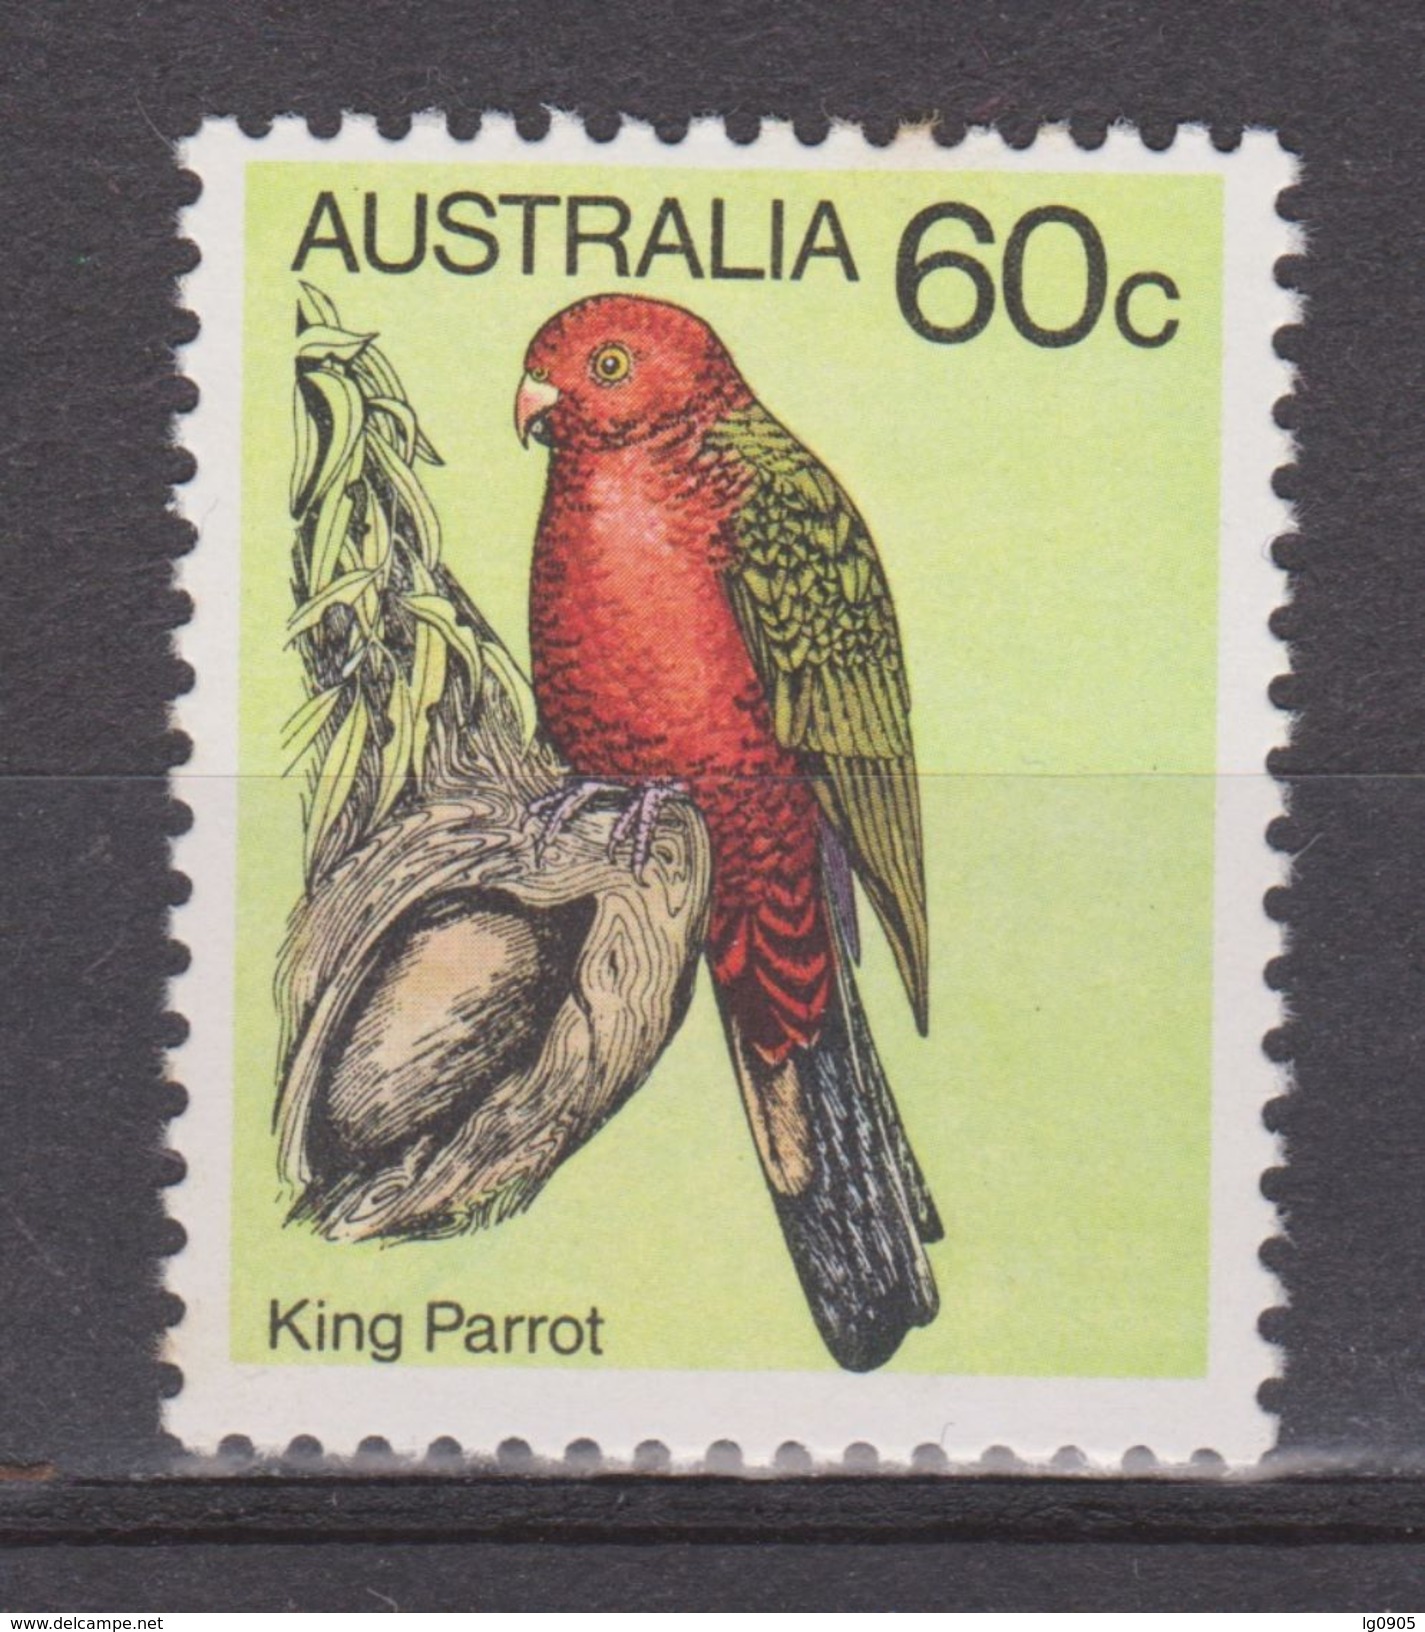 Australie Australia MNH ; Vogel, Oiseau, Ave, Bird, Parod, Parkiet NOW MANY ANIMAL STAMPS FOR SALE - Papegaaien, Parkieten